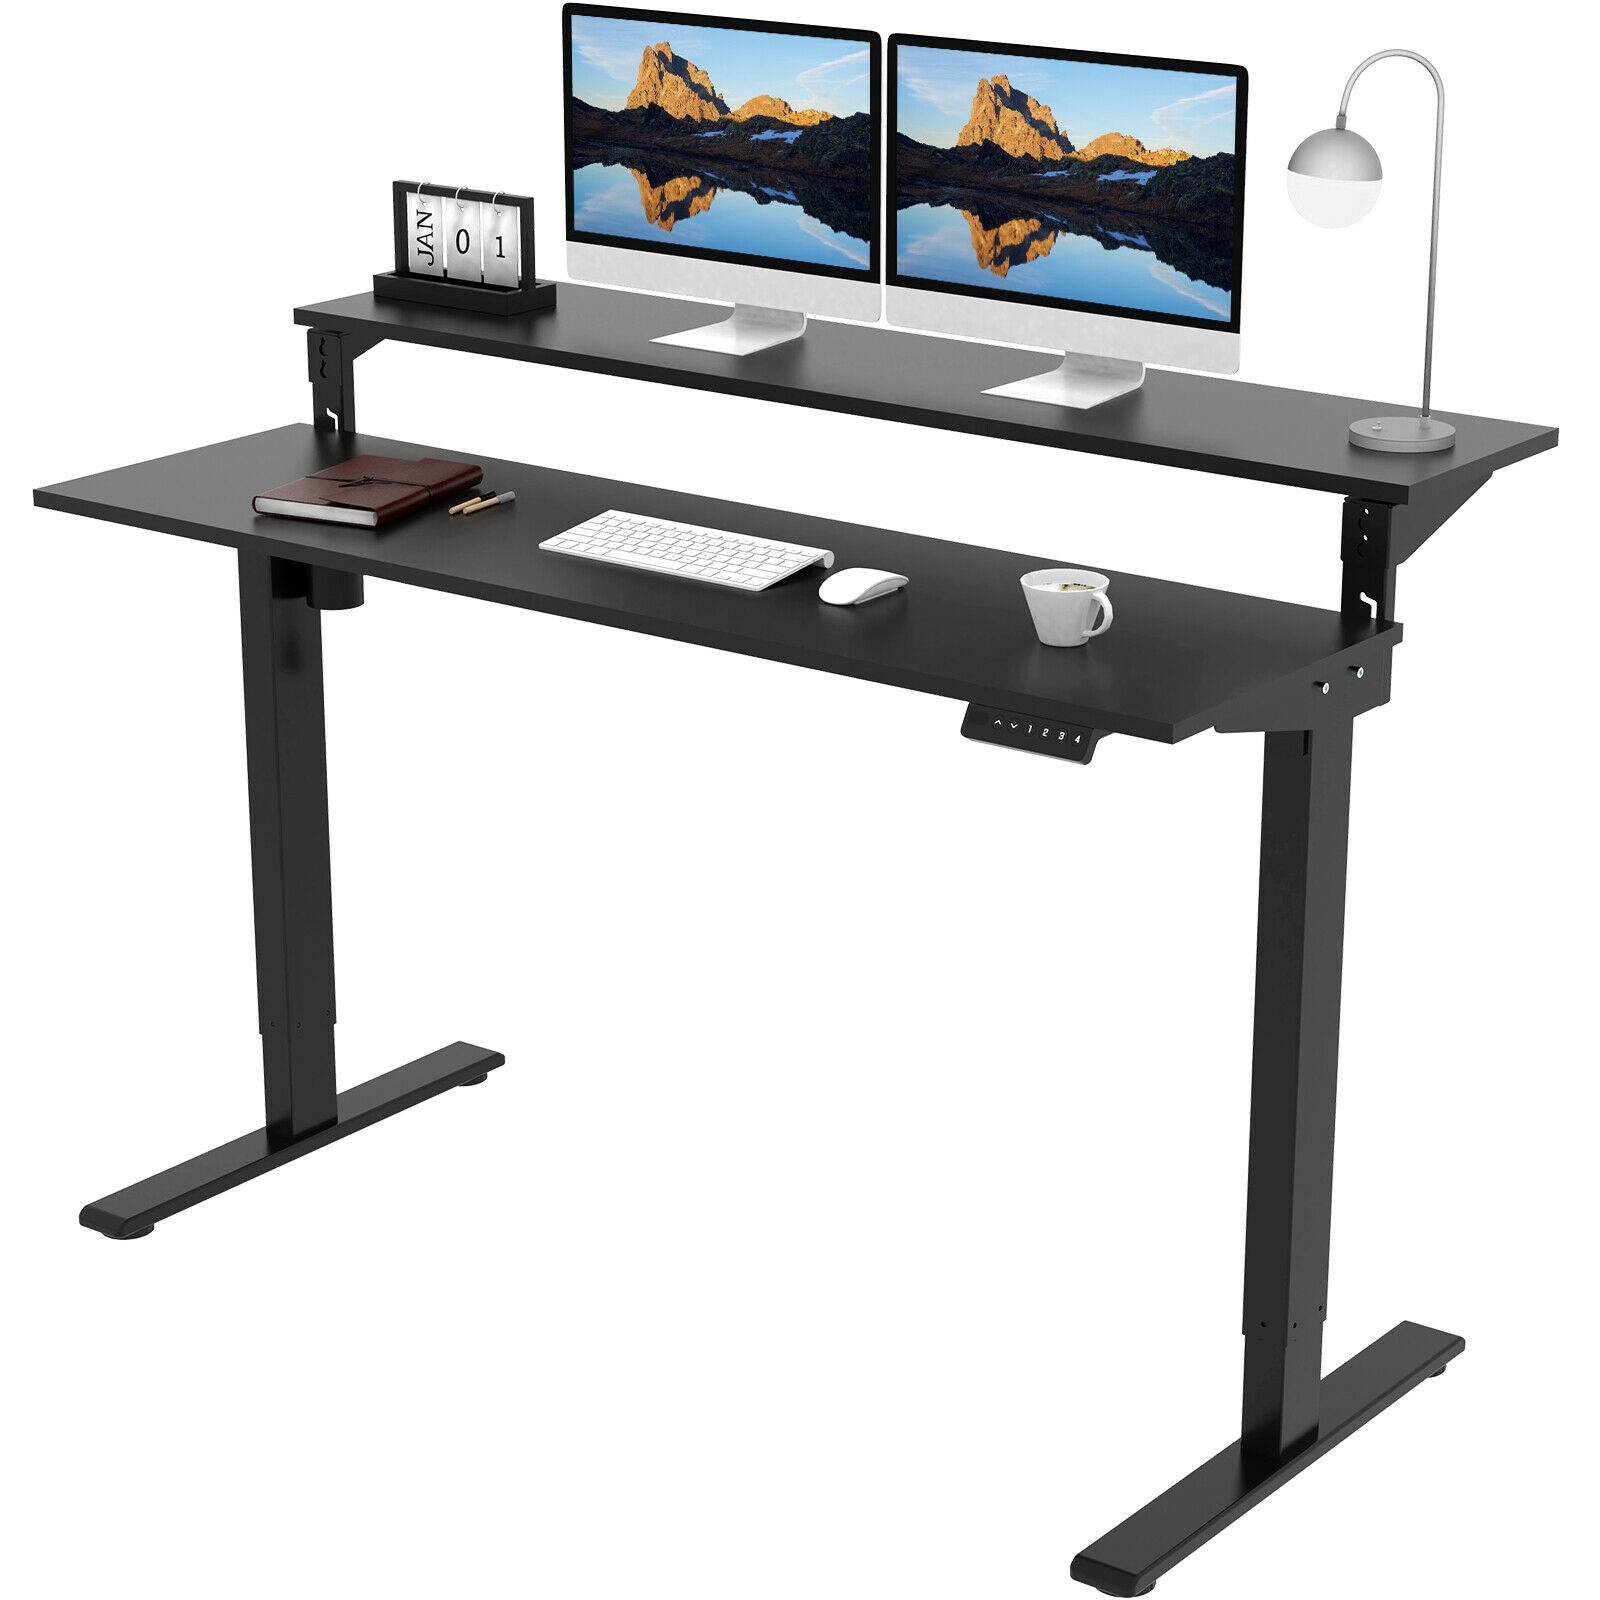 Office Furniture Height Adjustable Desk Ergonomic workplace HomeOffice